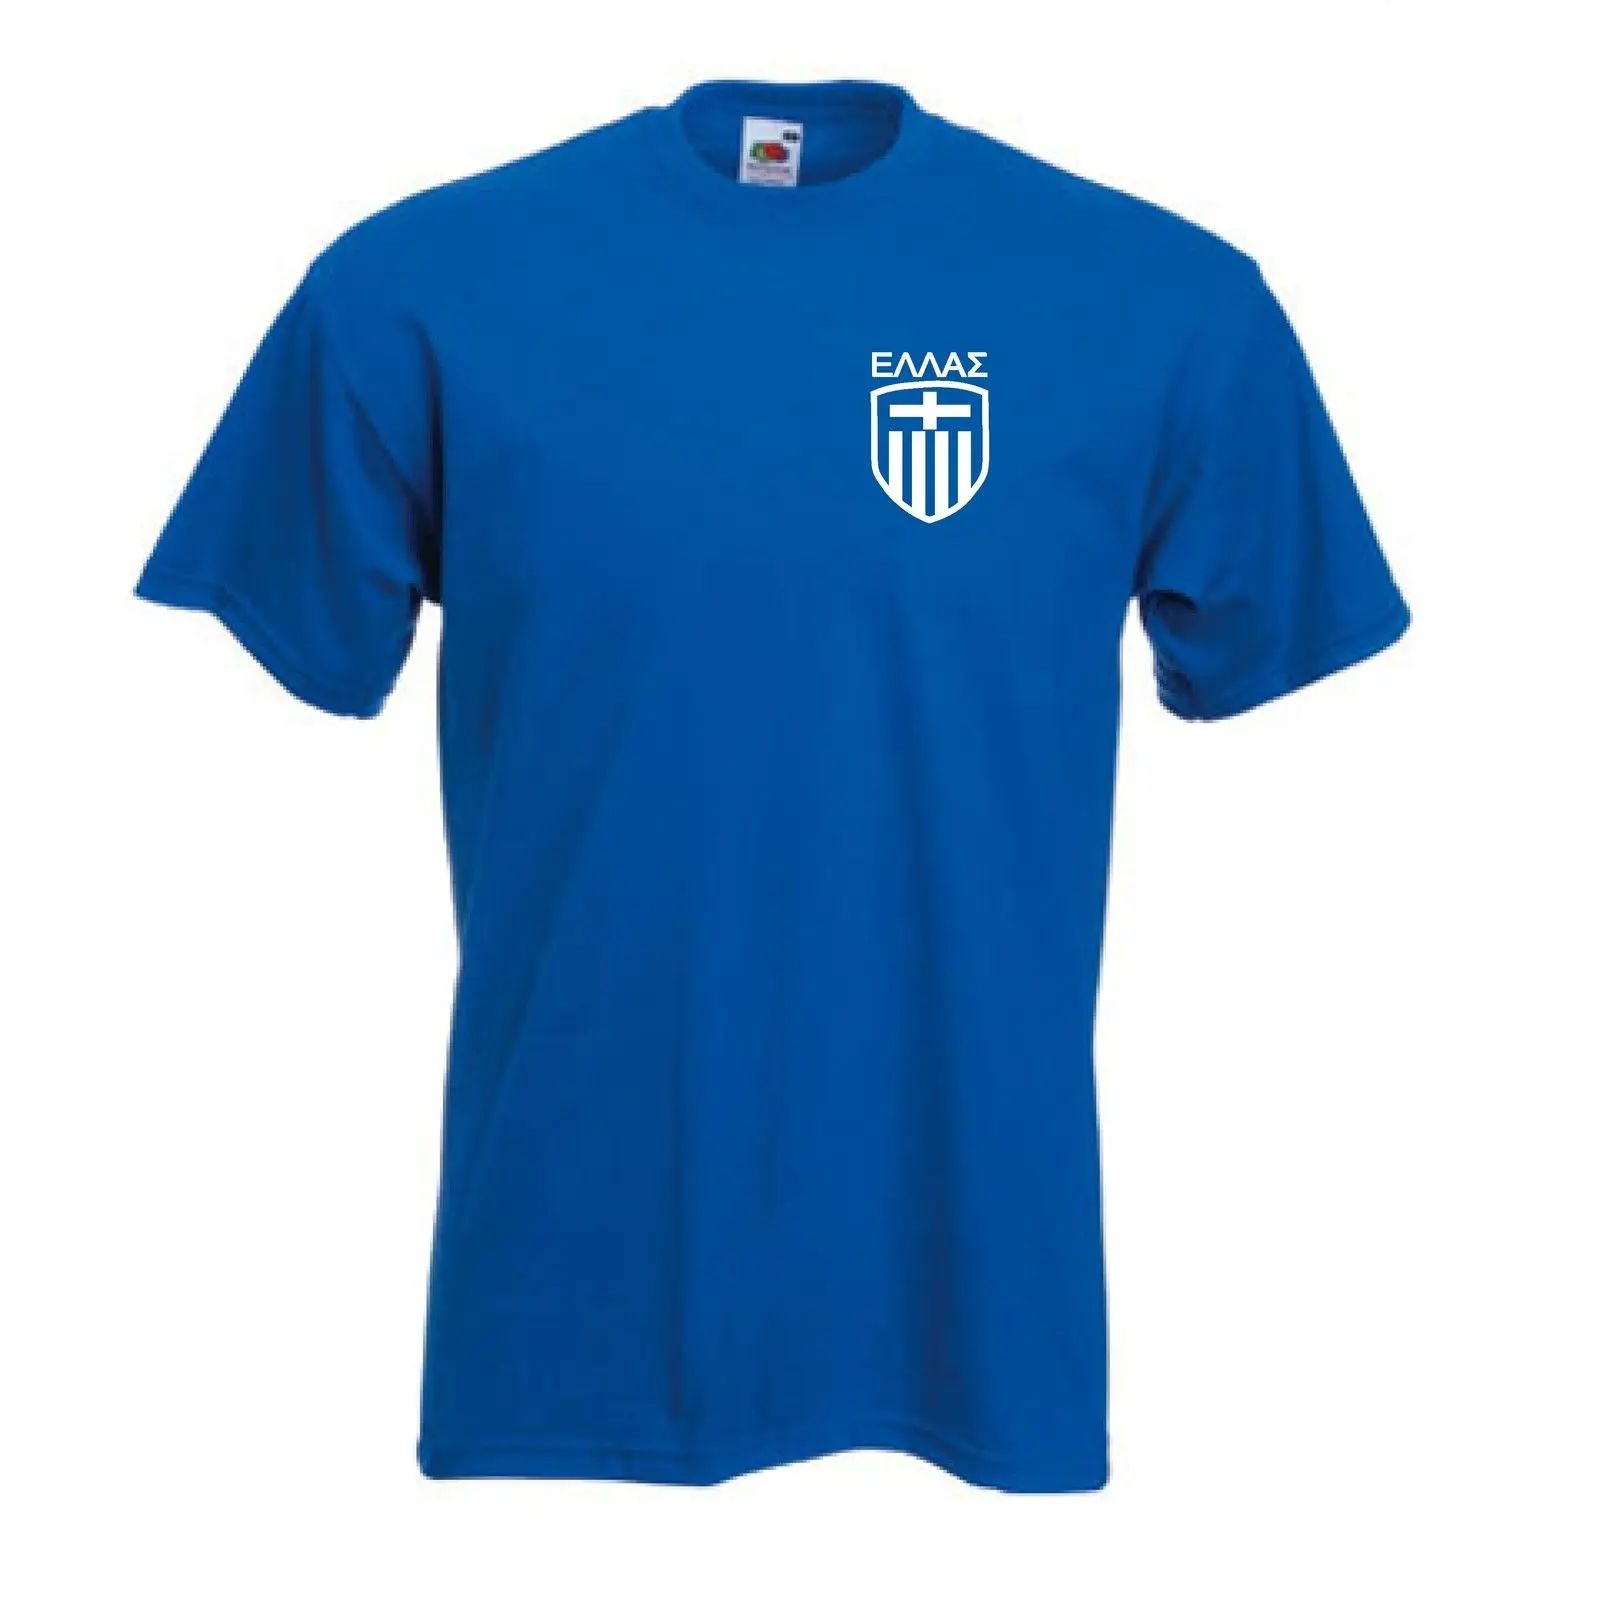 Brand T-Shirt Men 2019 Fashion Greece Greek Royal Blue Footballer Team Soccers T-Shirt Print T-Shirt Men Harajuku